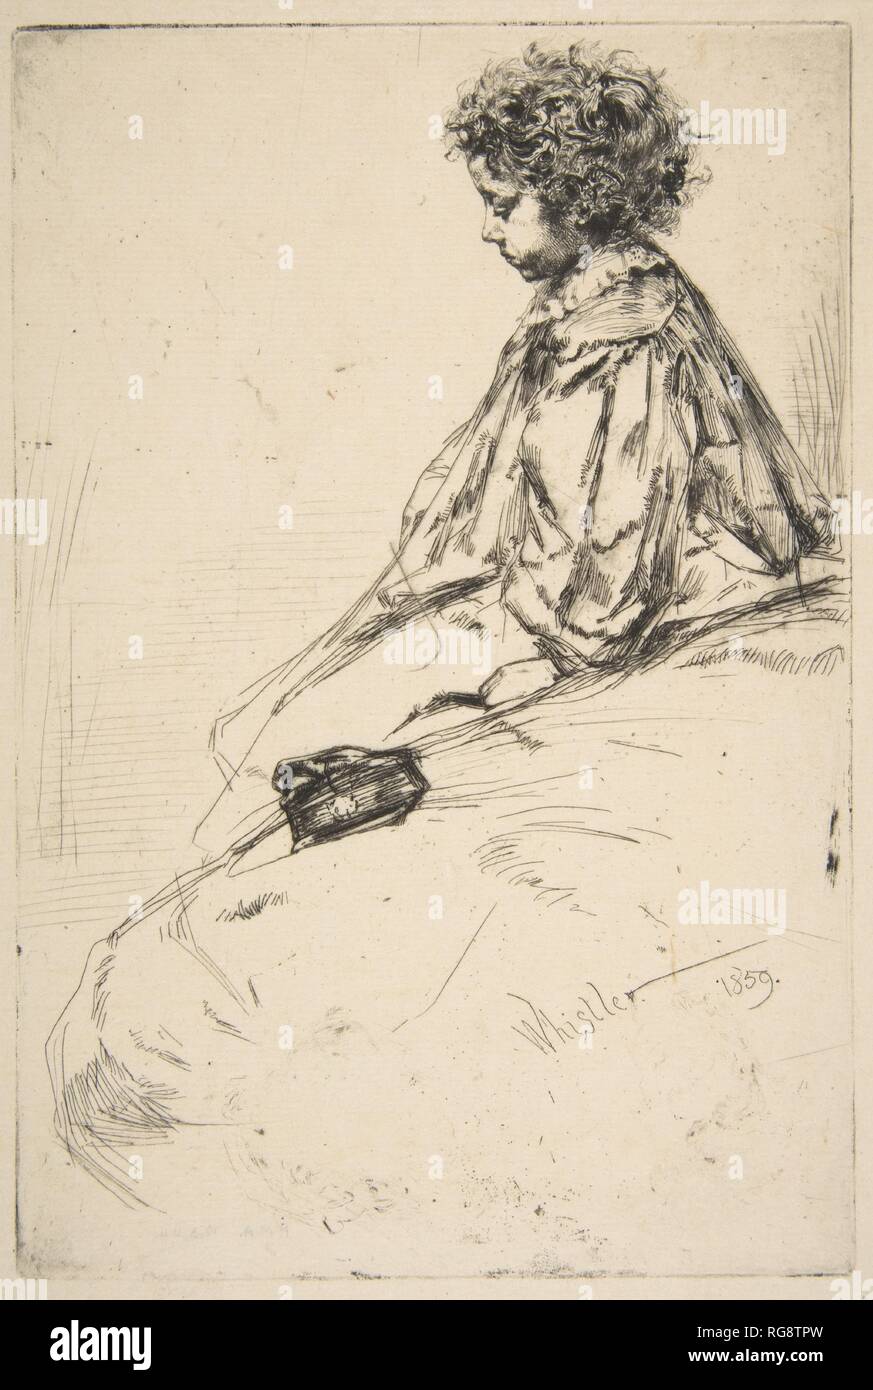 Bibi Lalouette. Artist: James McNeill Whistler (American, Lowell, Massachusetts 1834-1903 London). Dimensions: Plate: 9 x 6 in. (22.9 x 15.2 cm)  Sheet: 12 3/8 x 8 1/4 in. (31.4 x 21 cm). Date: 1859. Museum: Metropolitan Museum of Art, New York, USA. Stock Photo